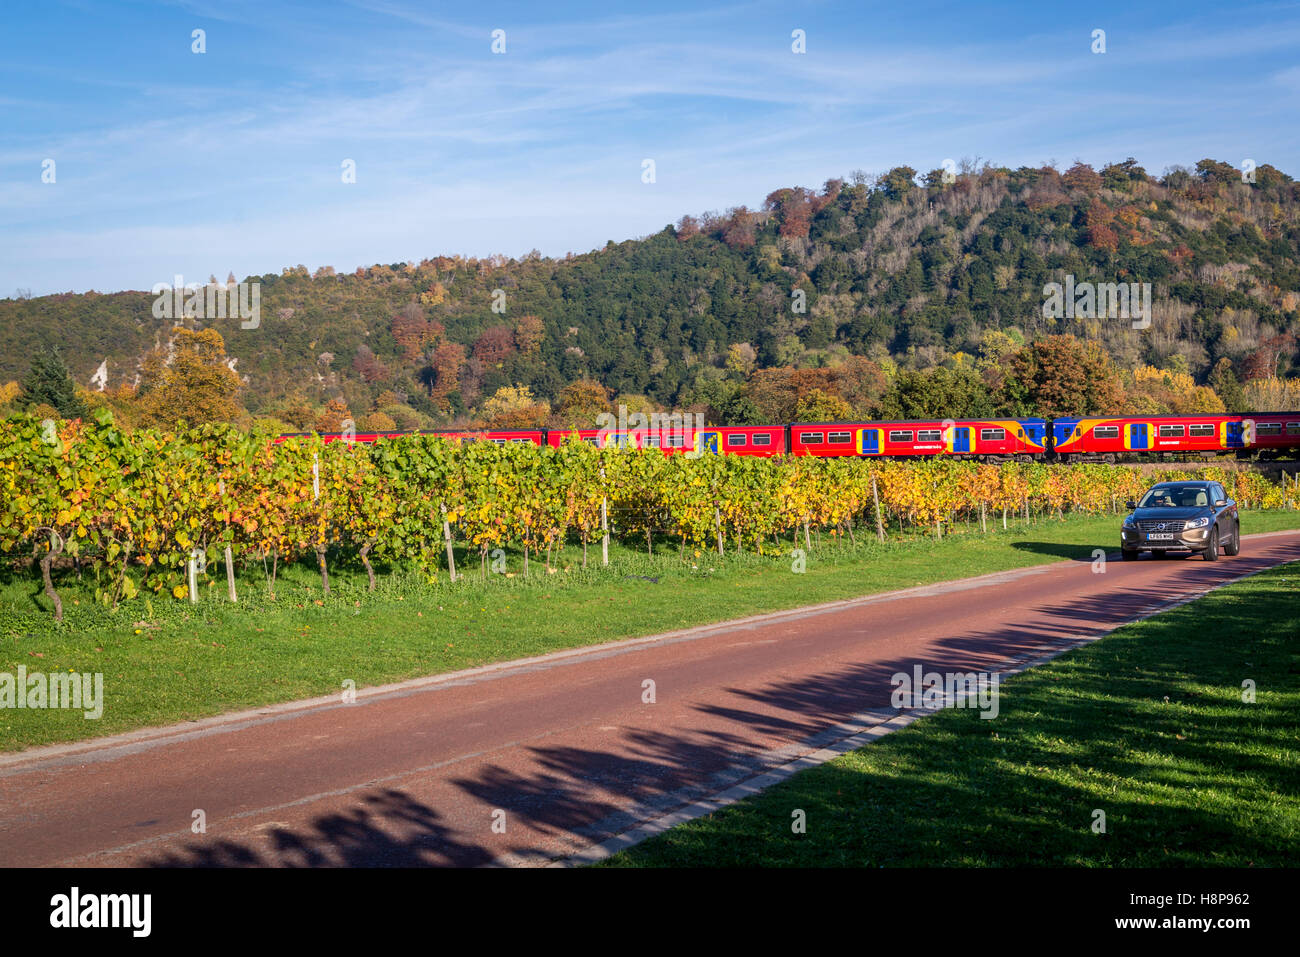 Southern Railway train passing by Denbies vineyard, Dorking, Surrey, England, UK Stock Photo